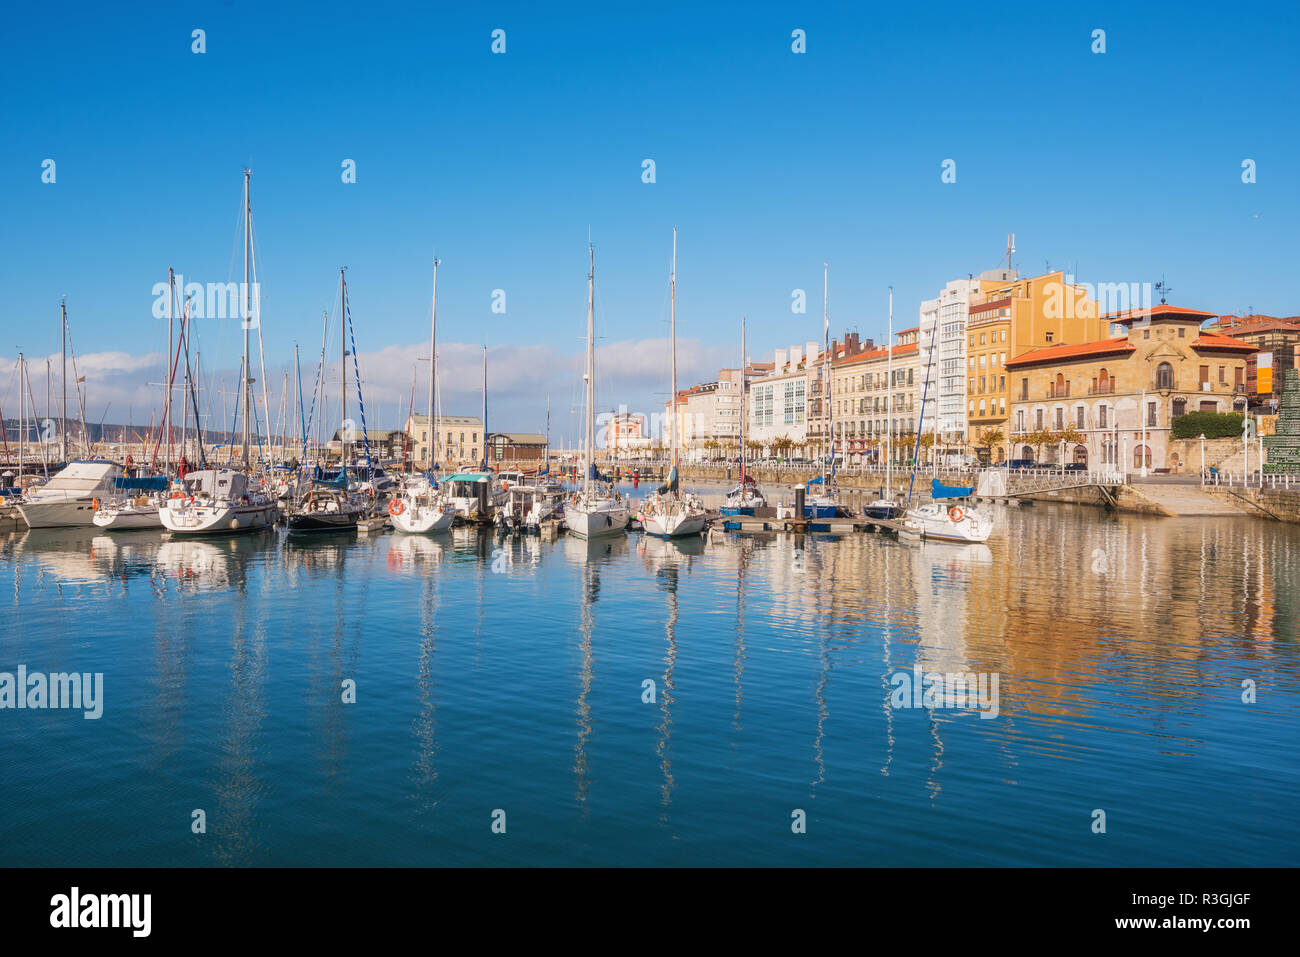 Gijon cityscape. Yatchs in marina port of Gijon, Asturias, Spain. Stock Photo